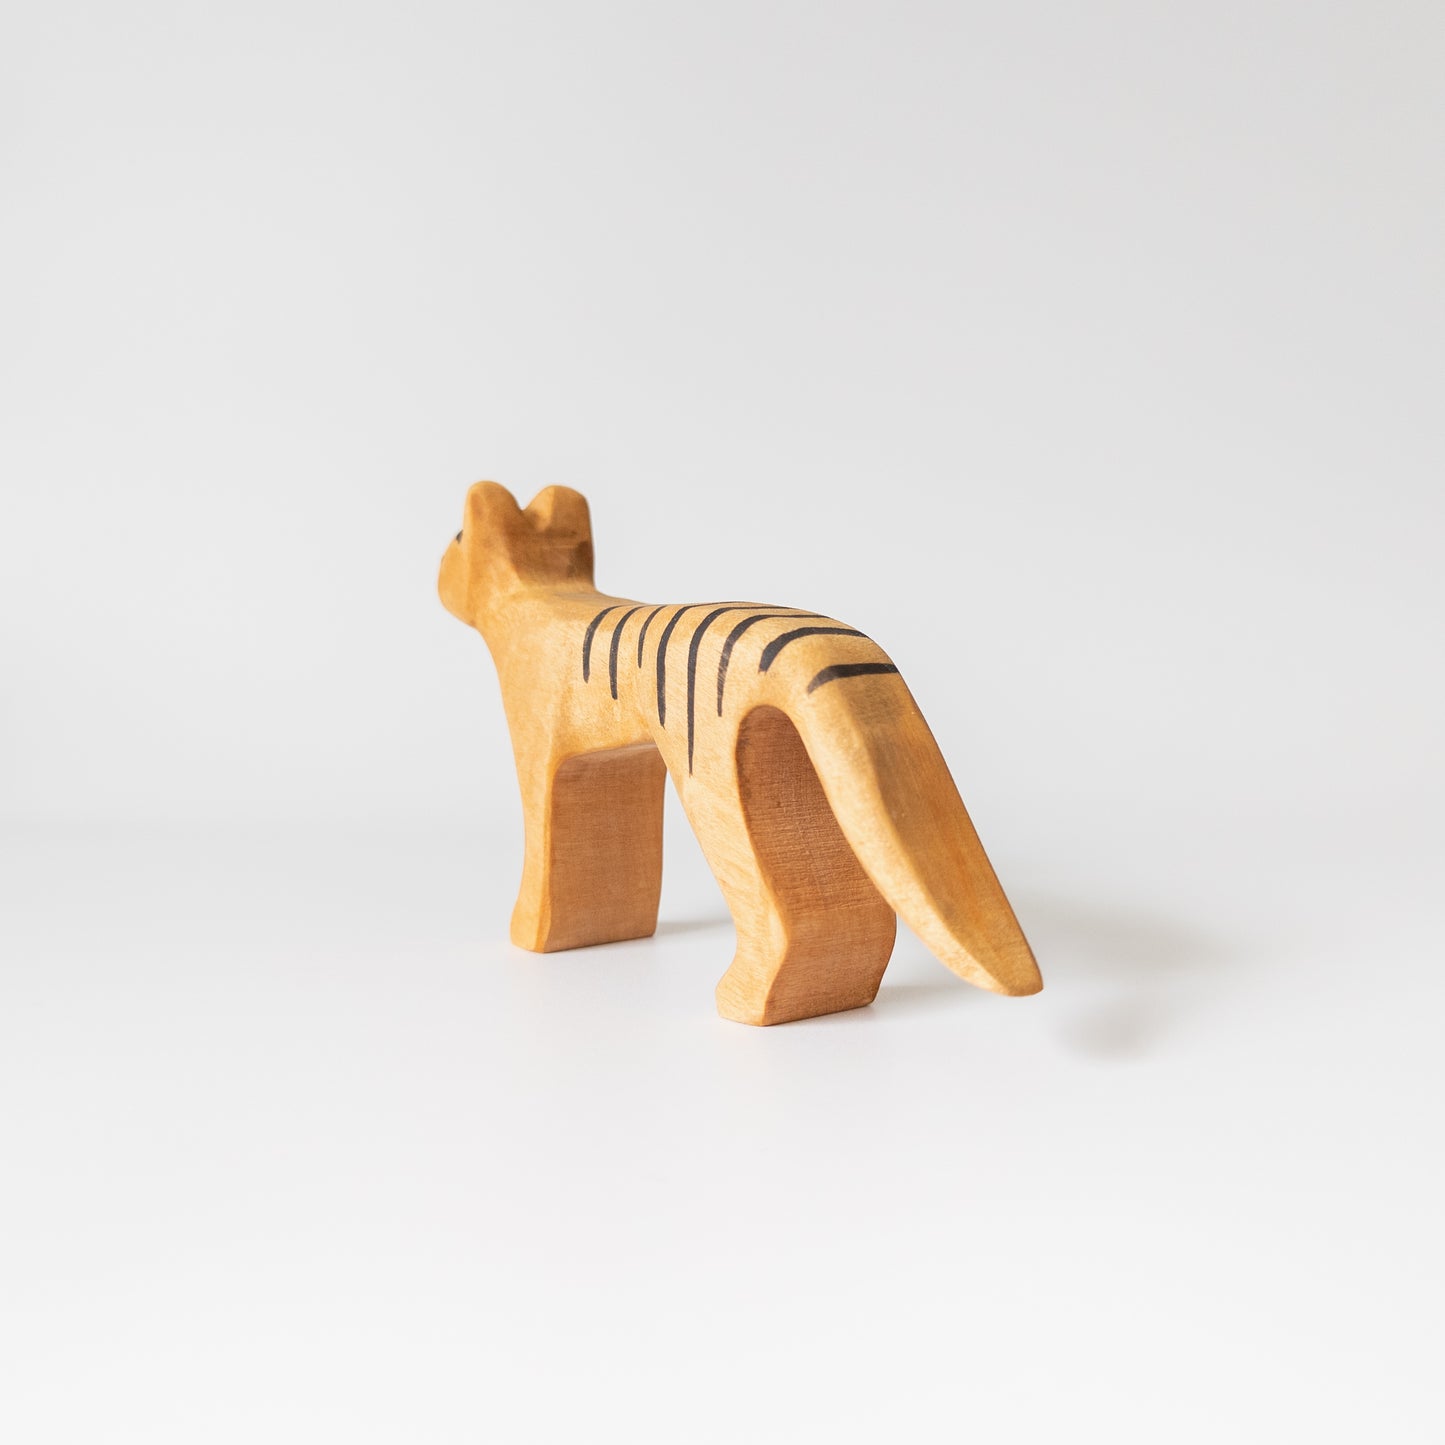 Thylacine ~ Tasmanian Tiger Wooden Toy